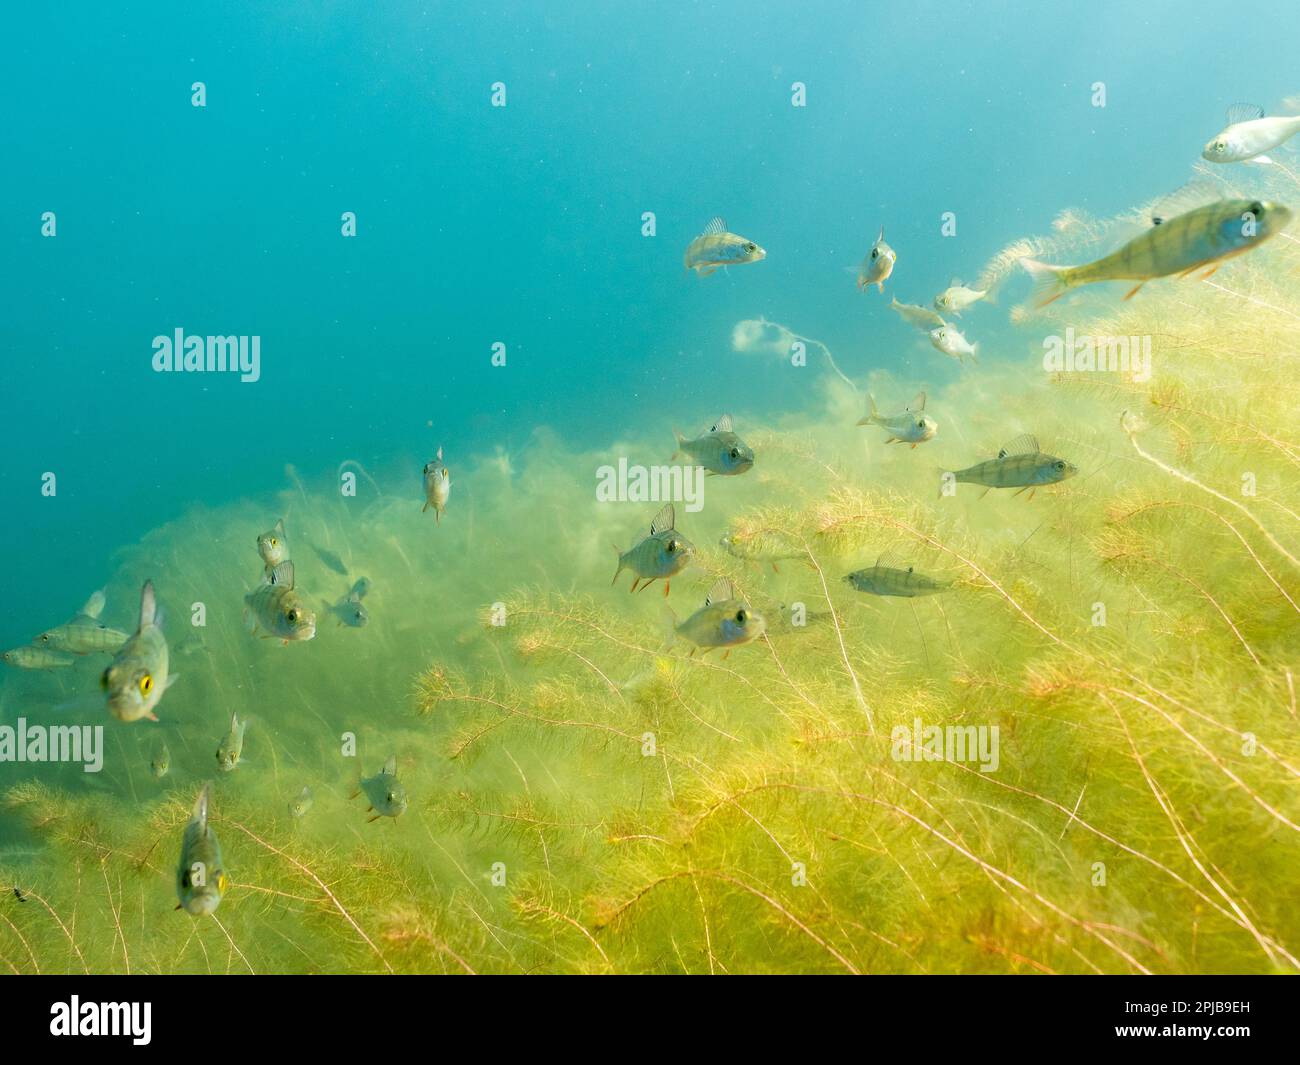 European perch swimming by alternate water-milfoil aquatic plant underwater vegetation Stock Photo